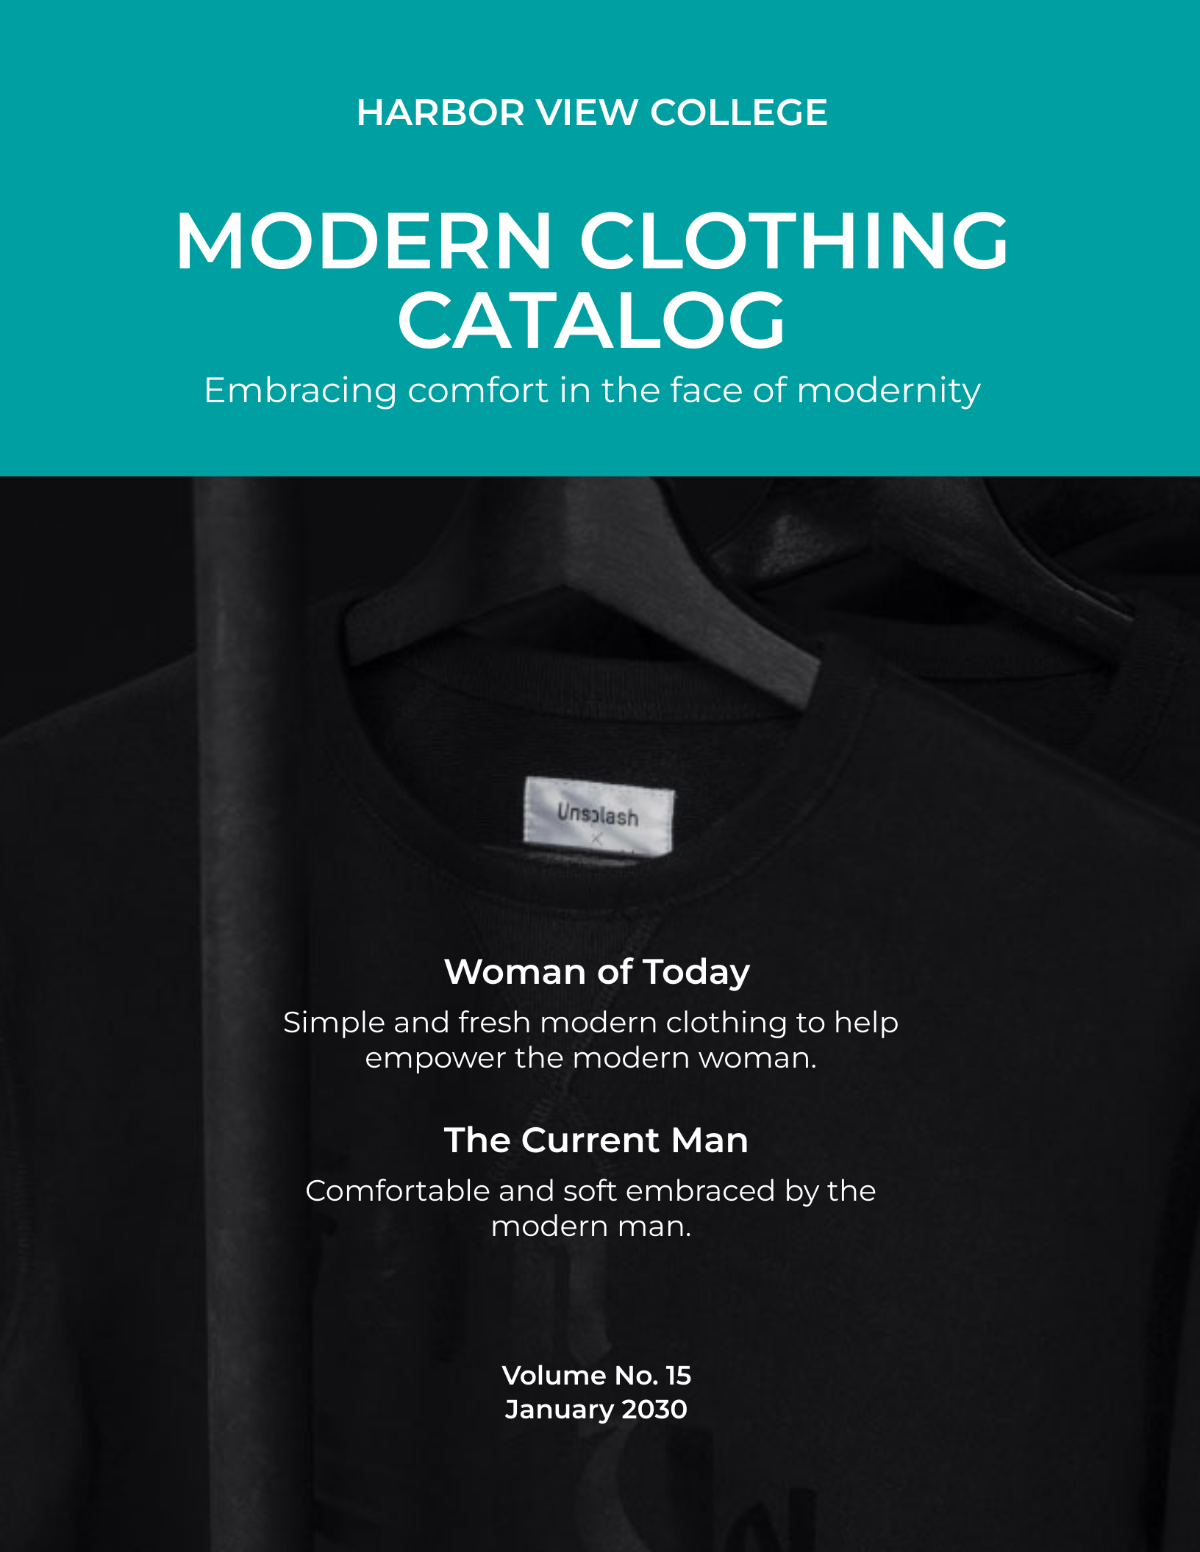 Modern Clothing Catalog Template